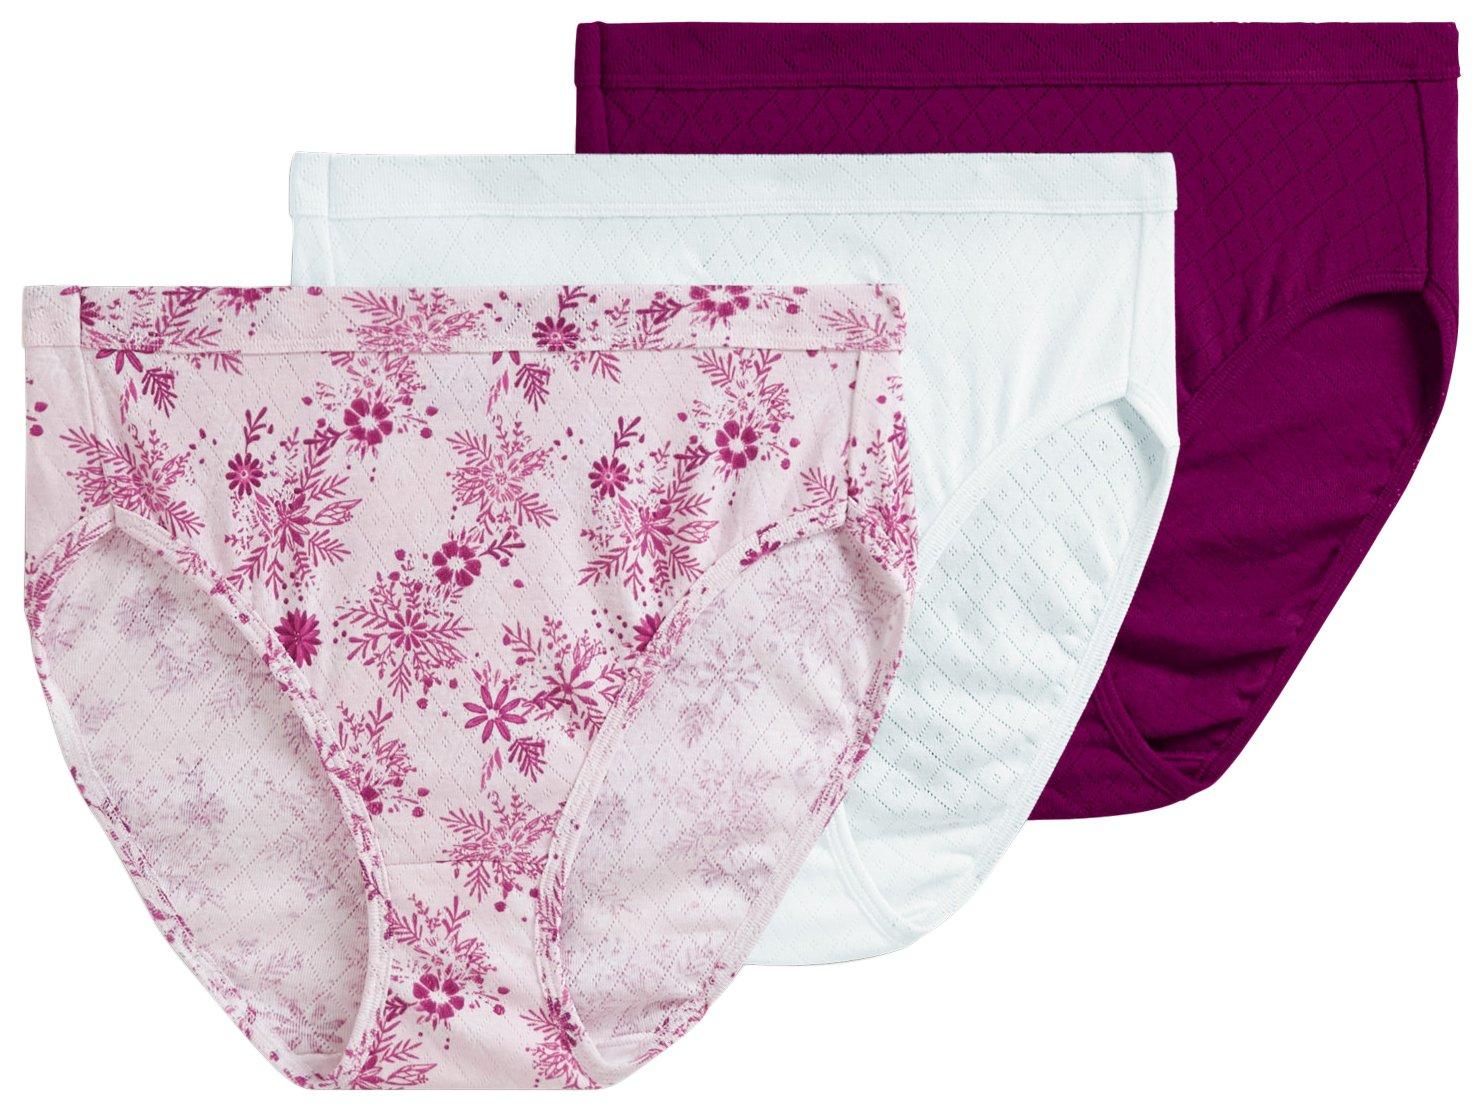 Jockey Pink Brief Panties for Women for sale